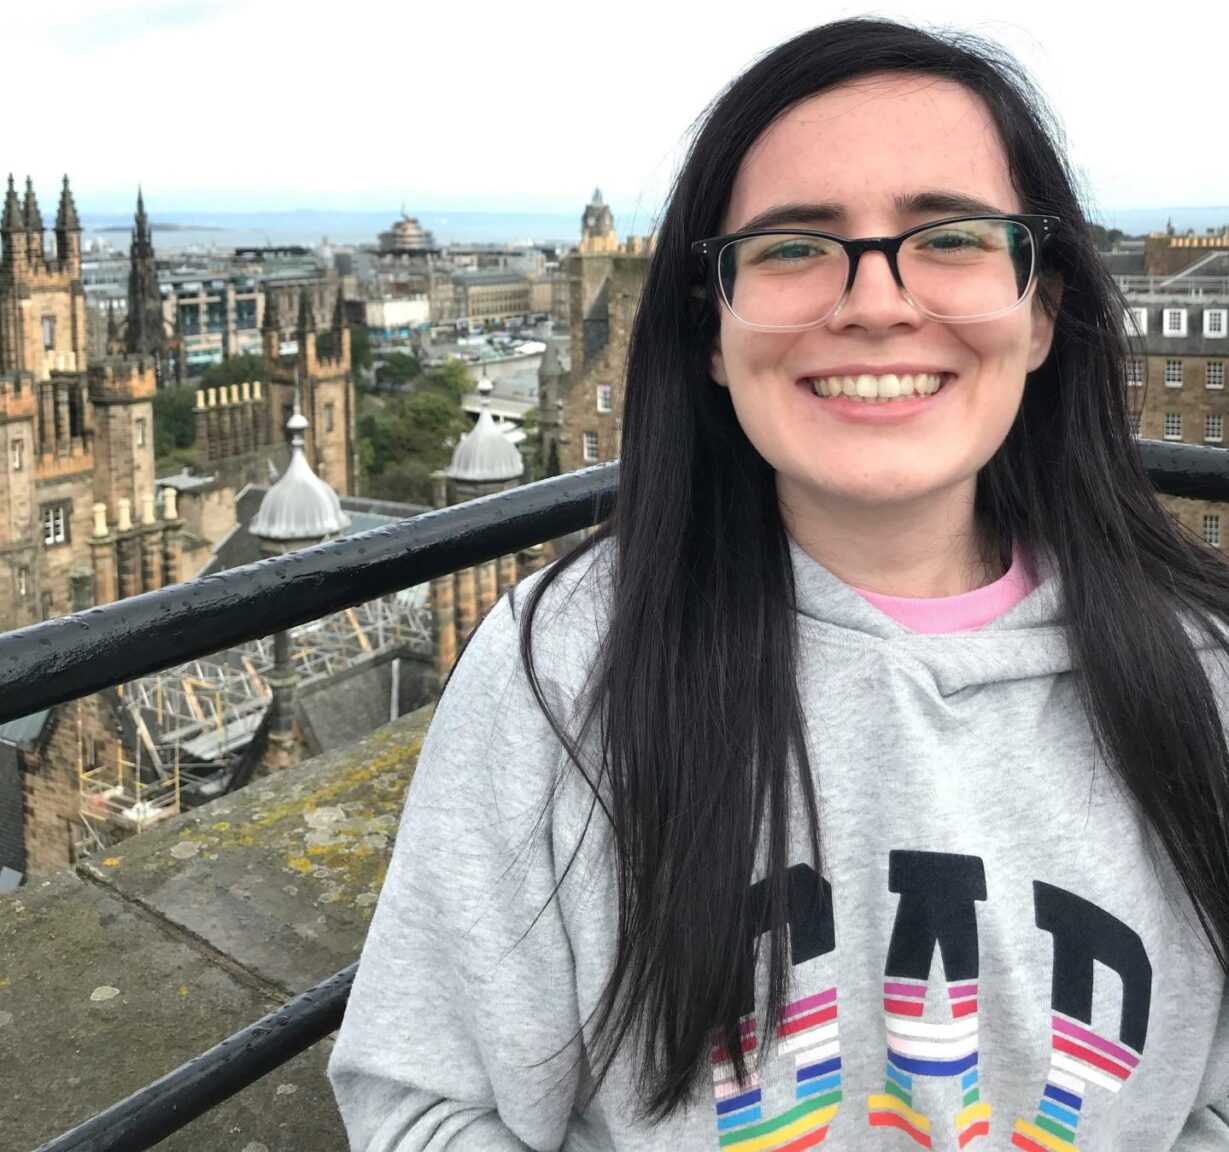 MS diagnosis inspired health overhaul for Dundee woman Katy